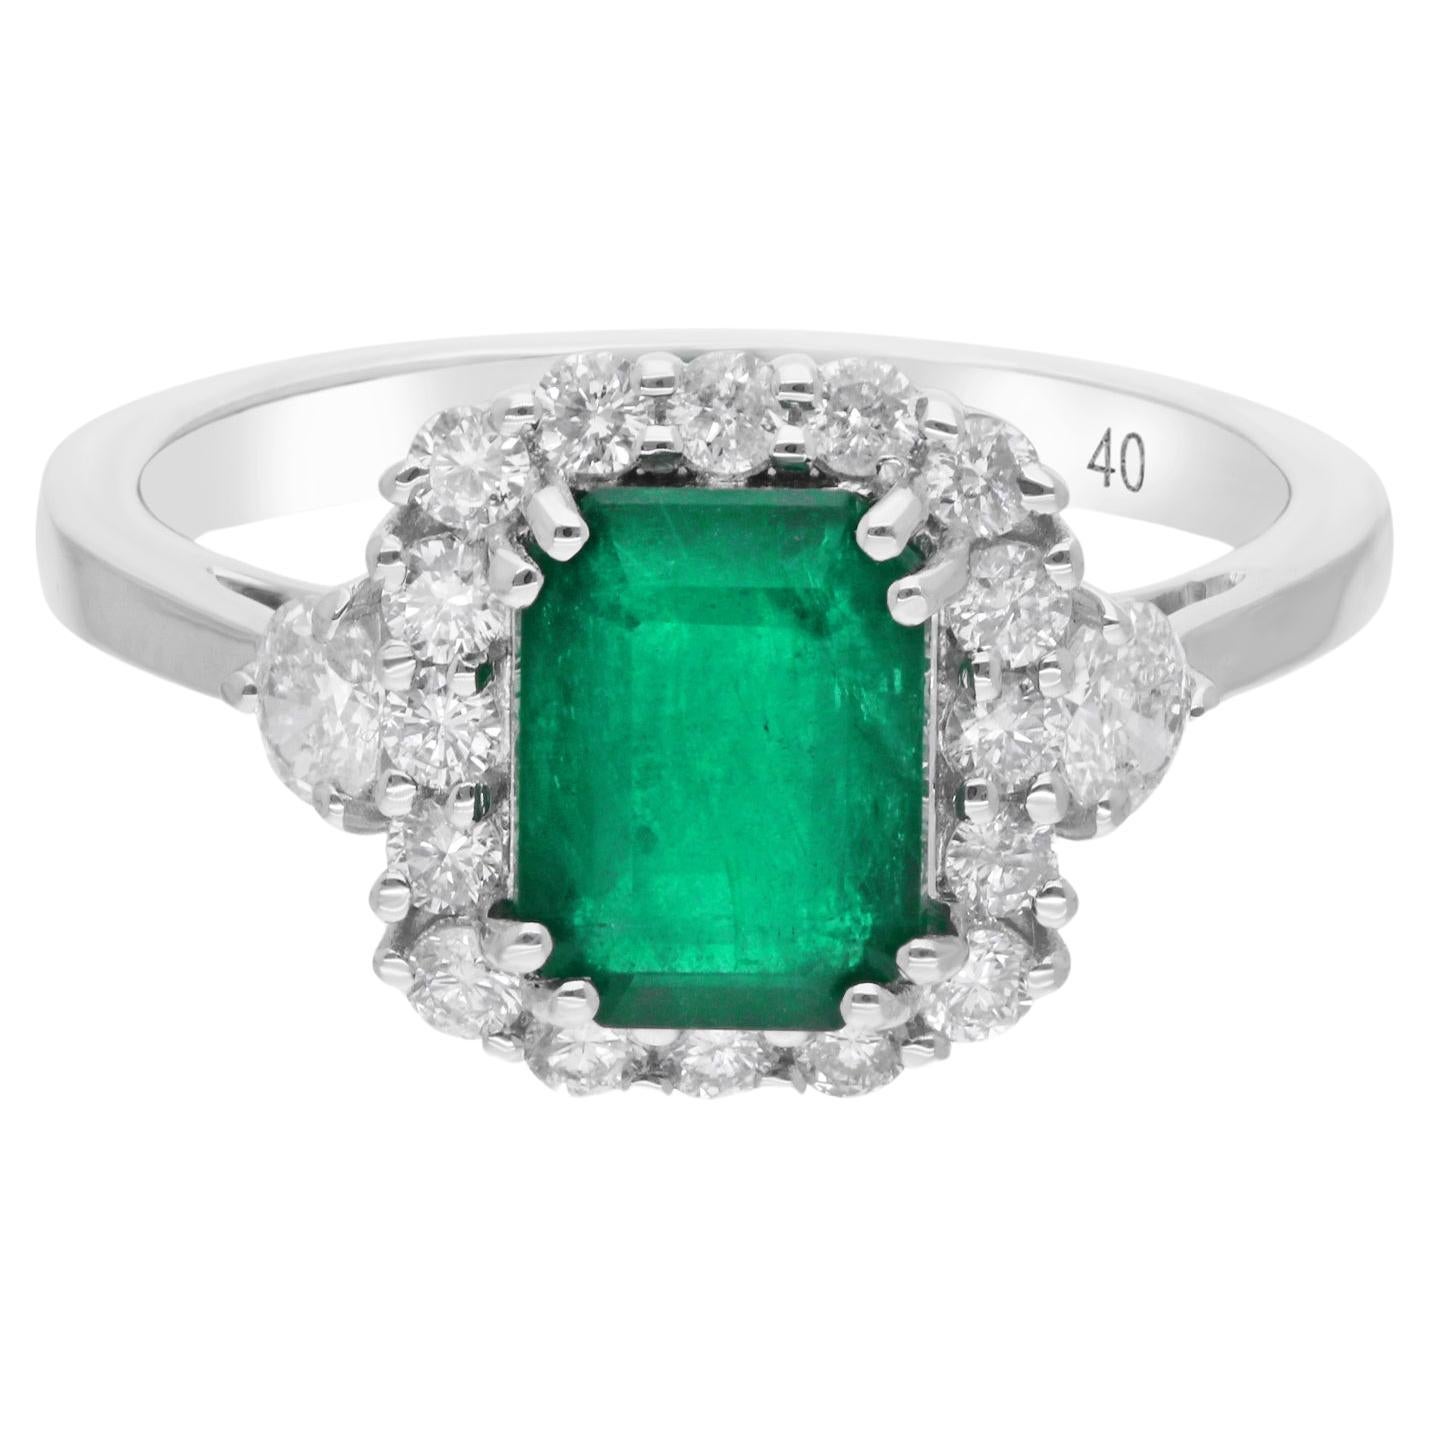 Real Zambian Emerald Gemstone Cocktail Ring Diamond 14 Karat White Gold 2.20 TCW